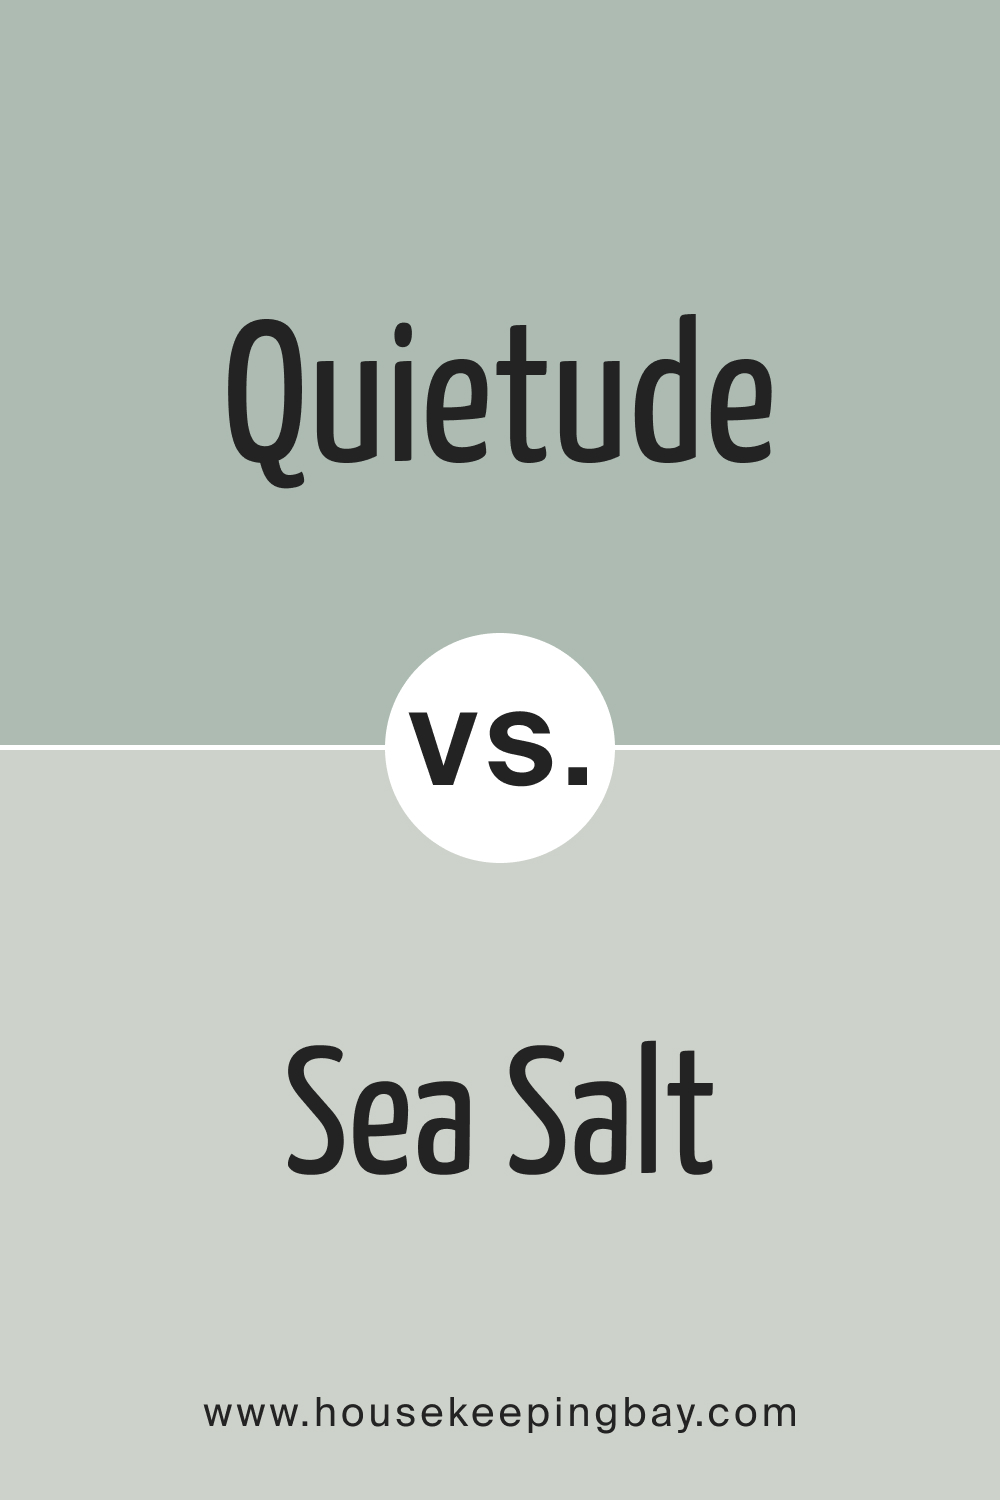 quietude vs sea salt